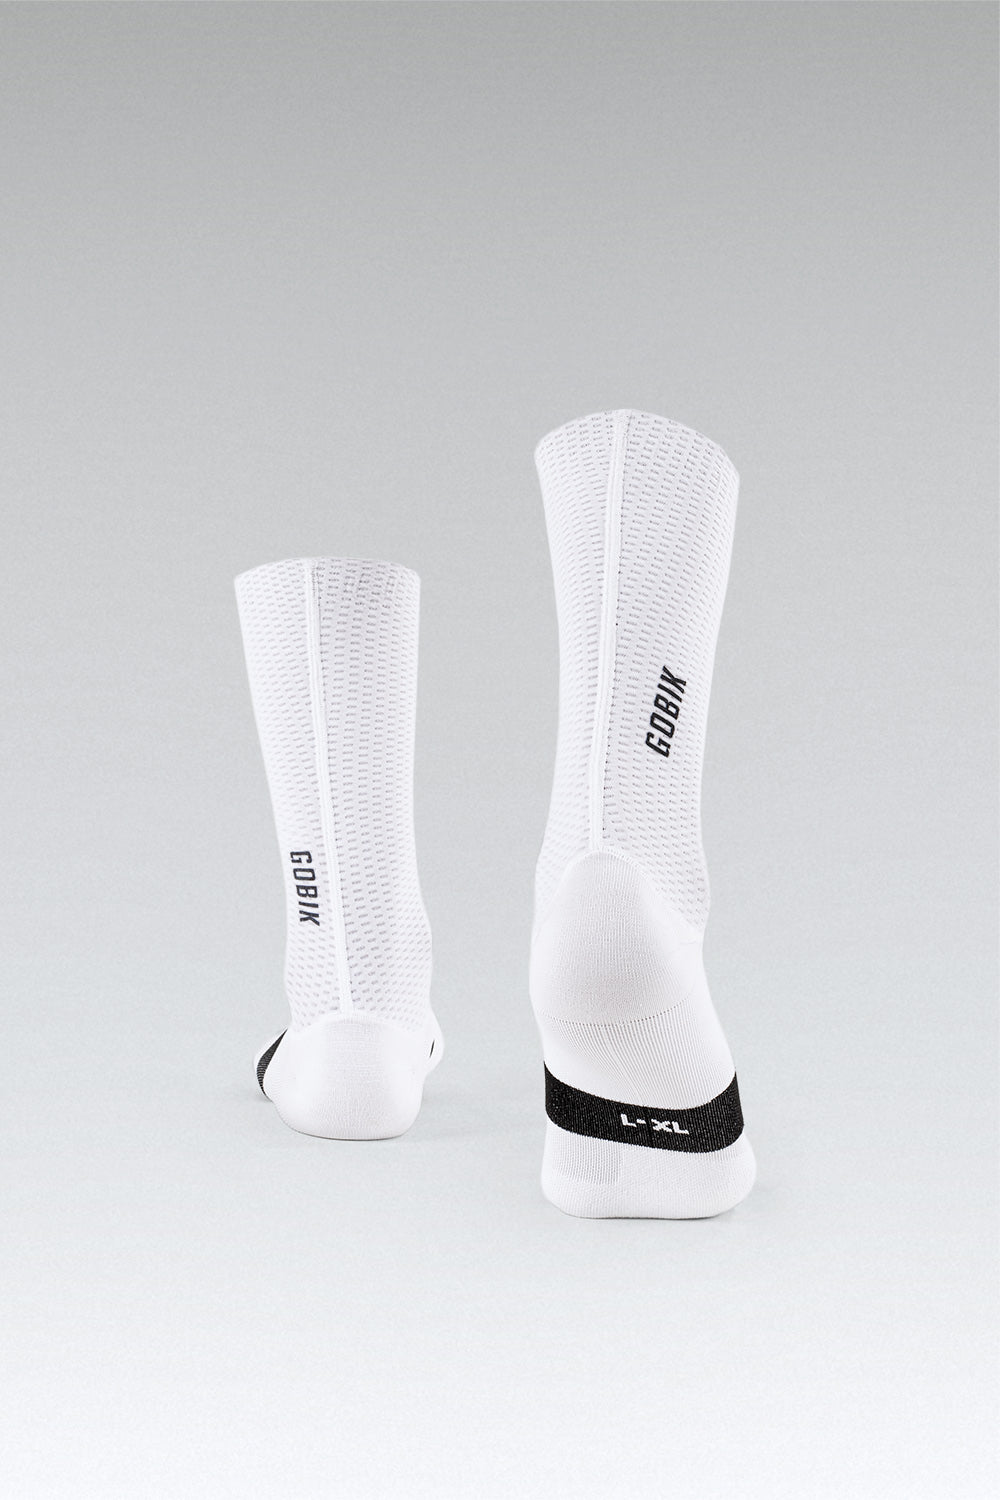 Los mejores calcetines para la lluvia - Socks Market - 2024